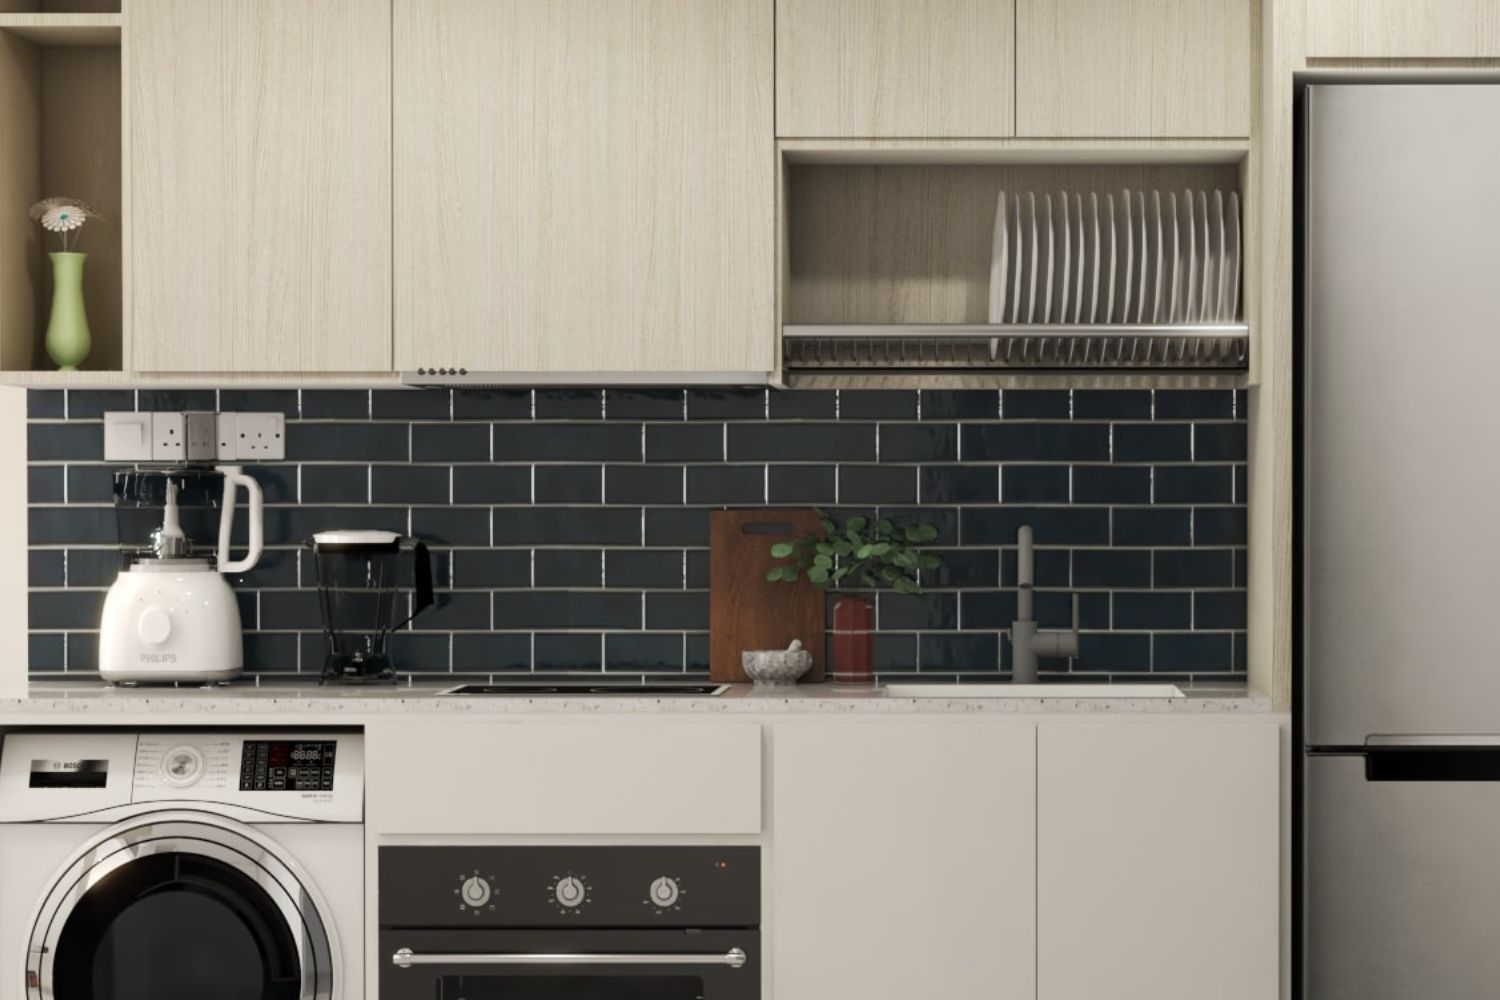 Rectangular Kitchen Backsplash Tiles Design With A Brick Pattern | Livspace